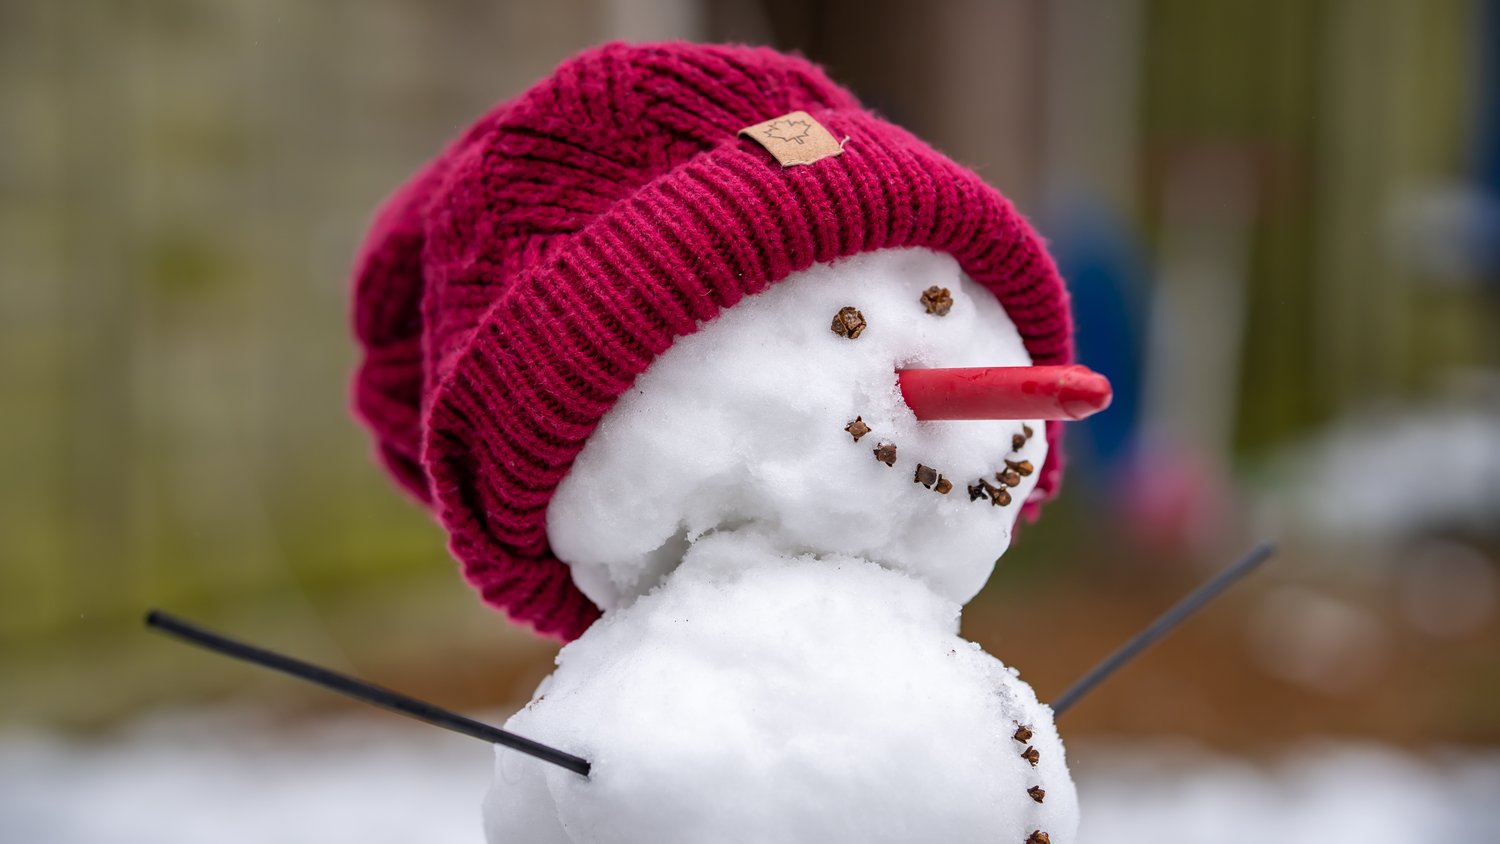 Snowman in a floppy red hat